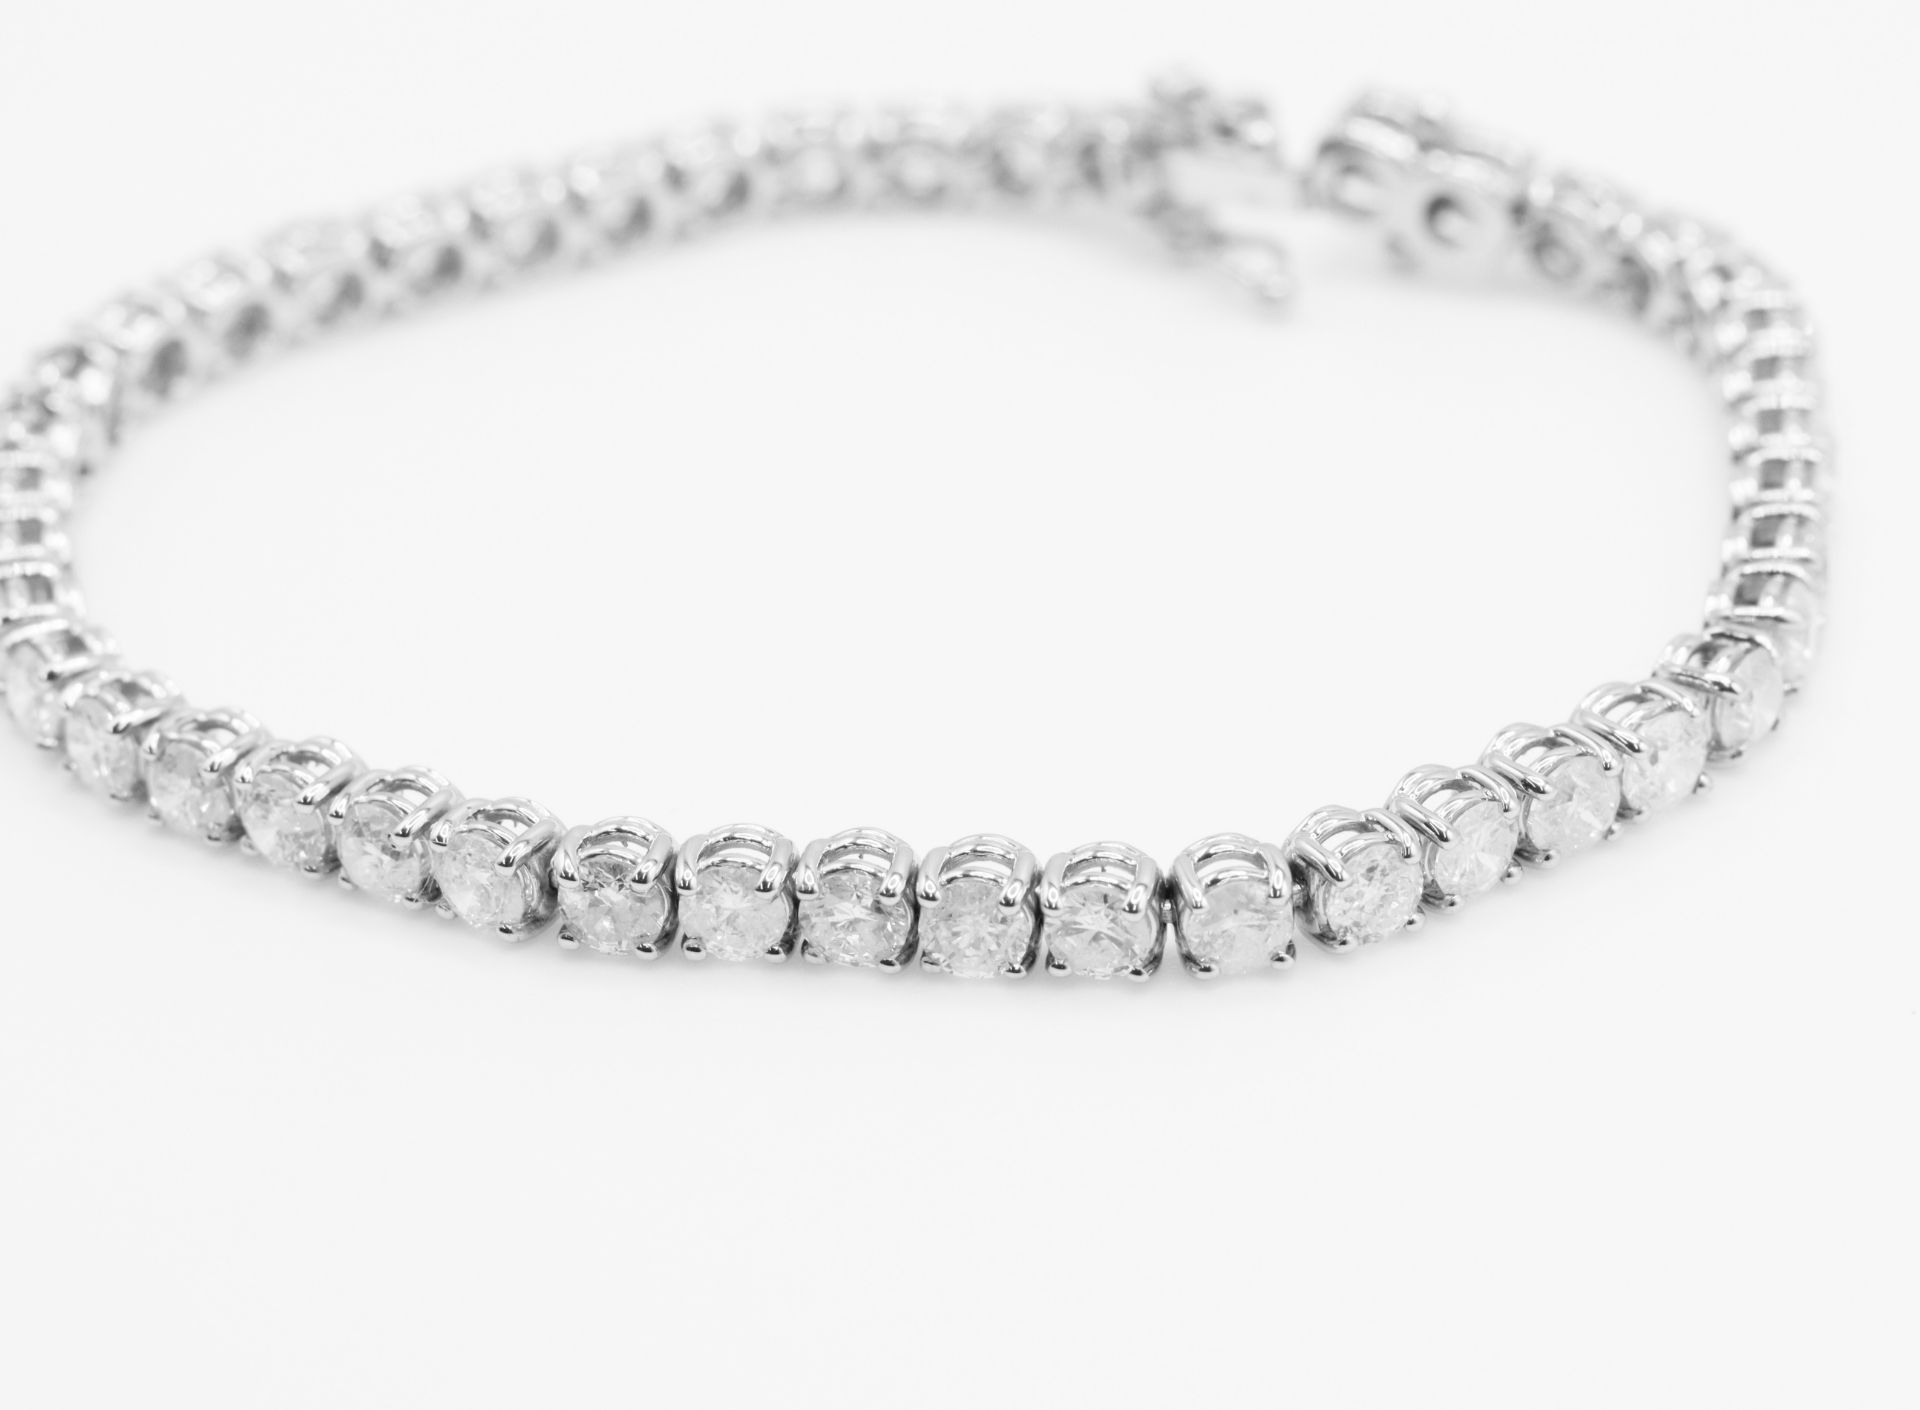 9.0 Carat 18ct White Gold Tennis Bracelet set with Round Brilliant Cut Natural Diamonds - Image 5 of 17